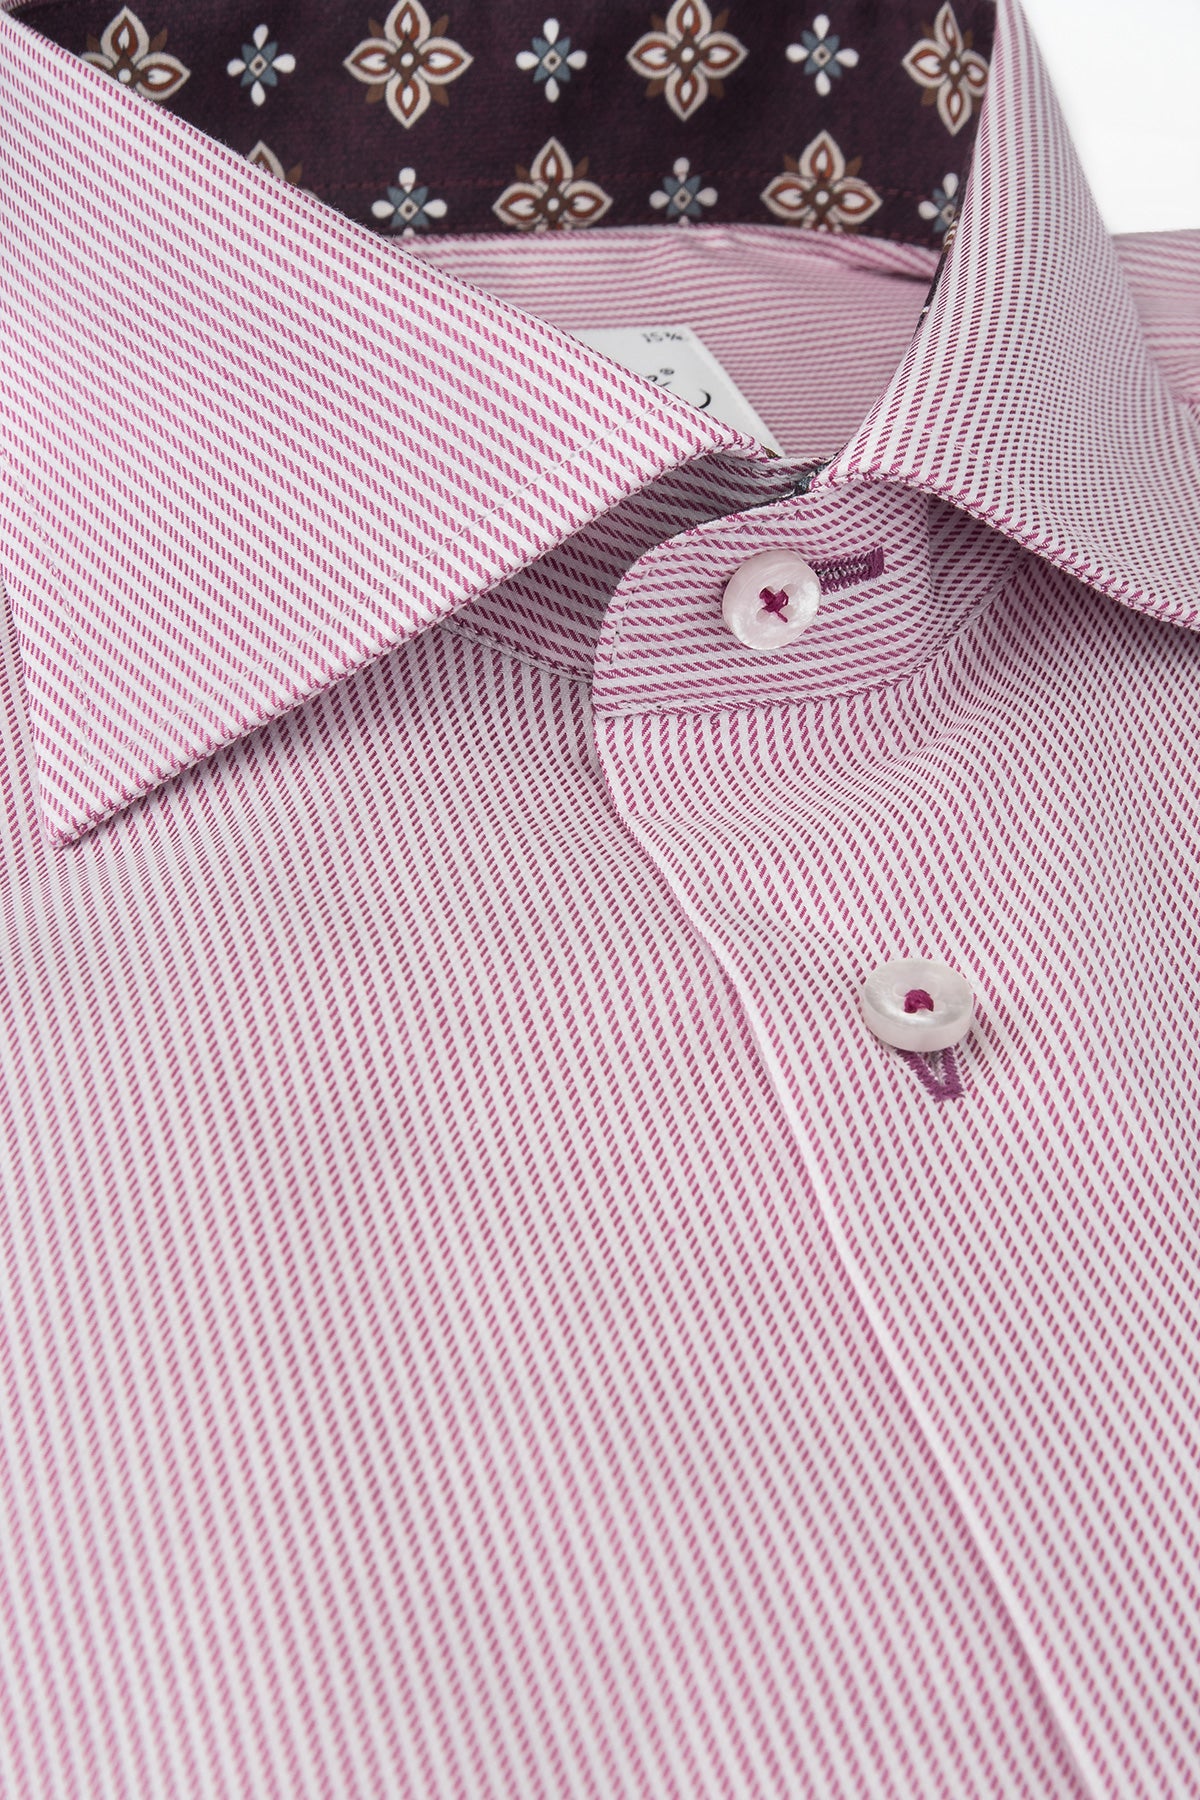 Pink regular fit shirt with contrast details